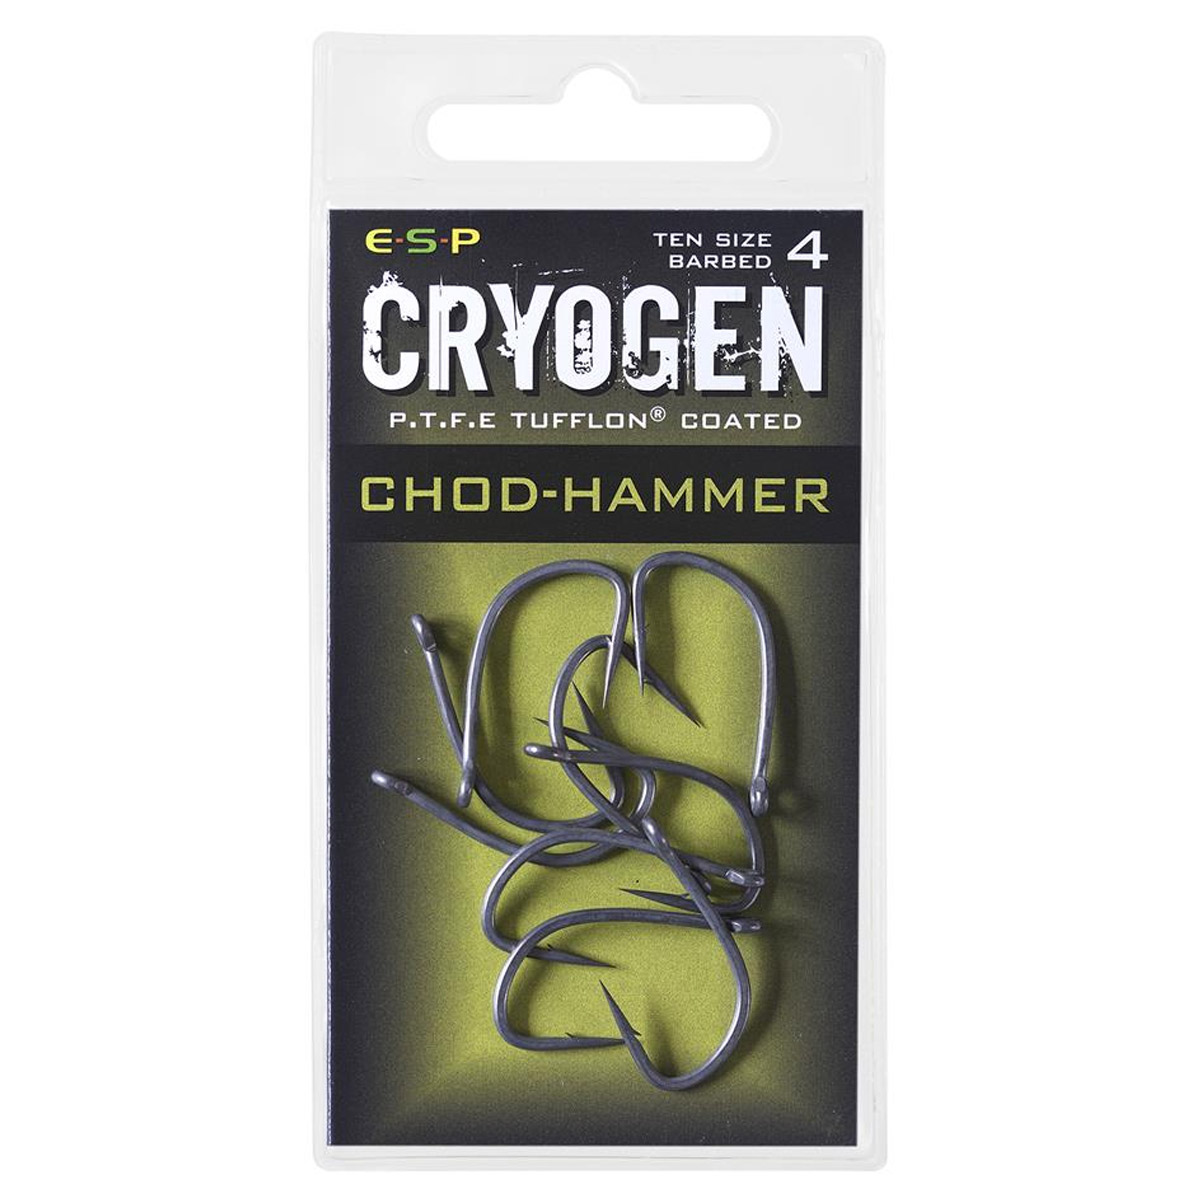 ESP Cryogen Chod-Hammer 